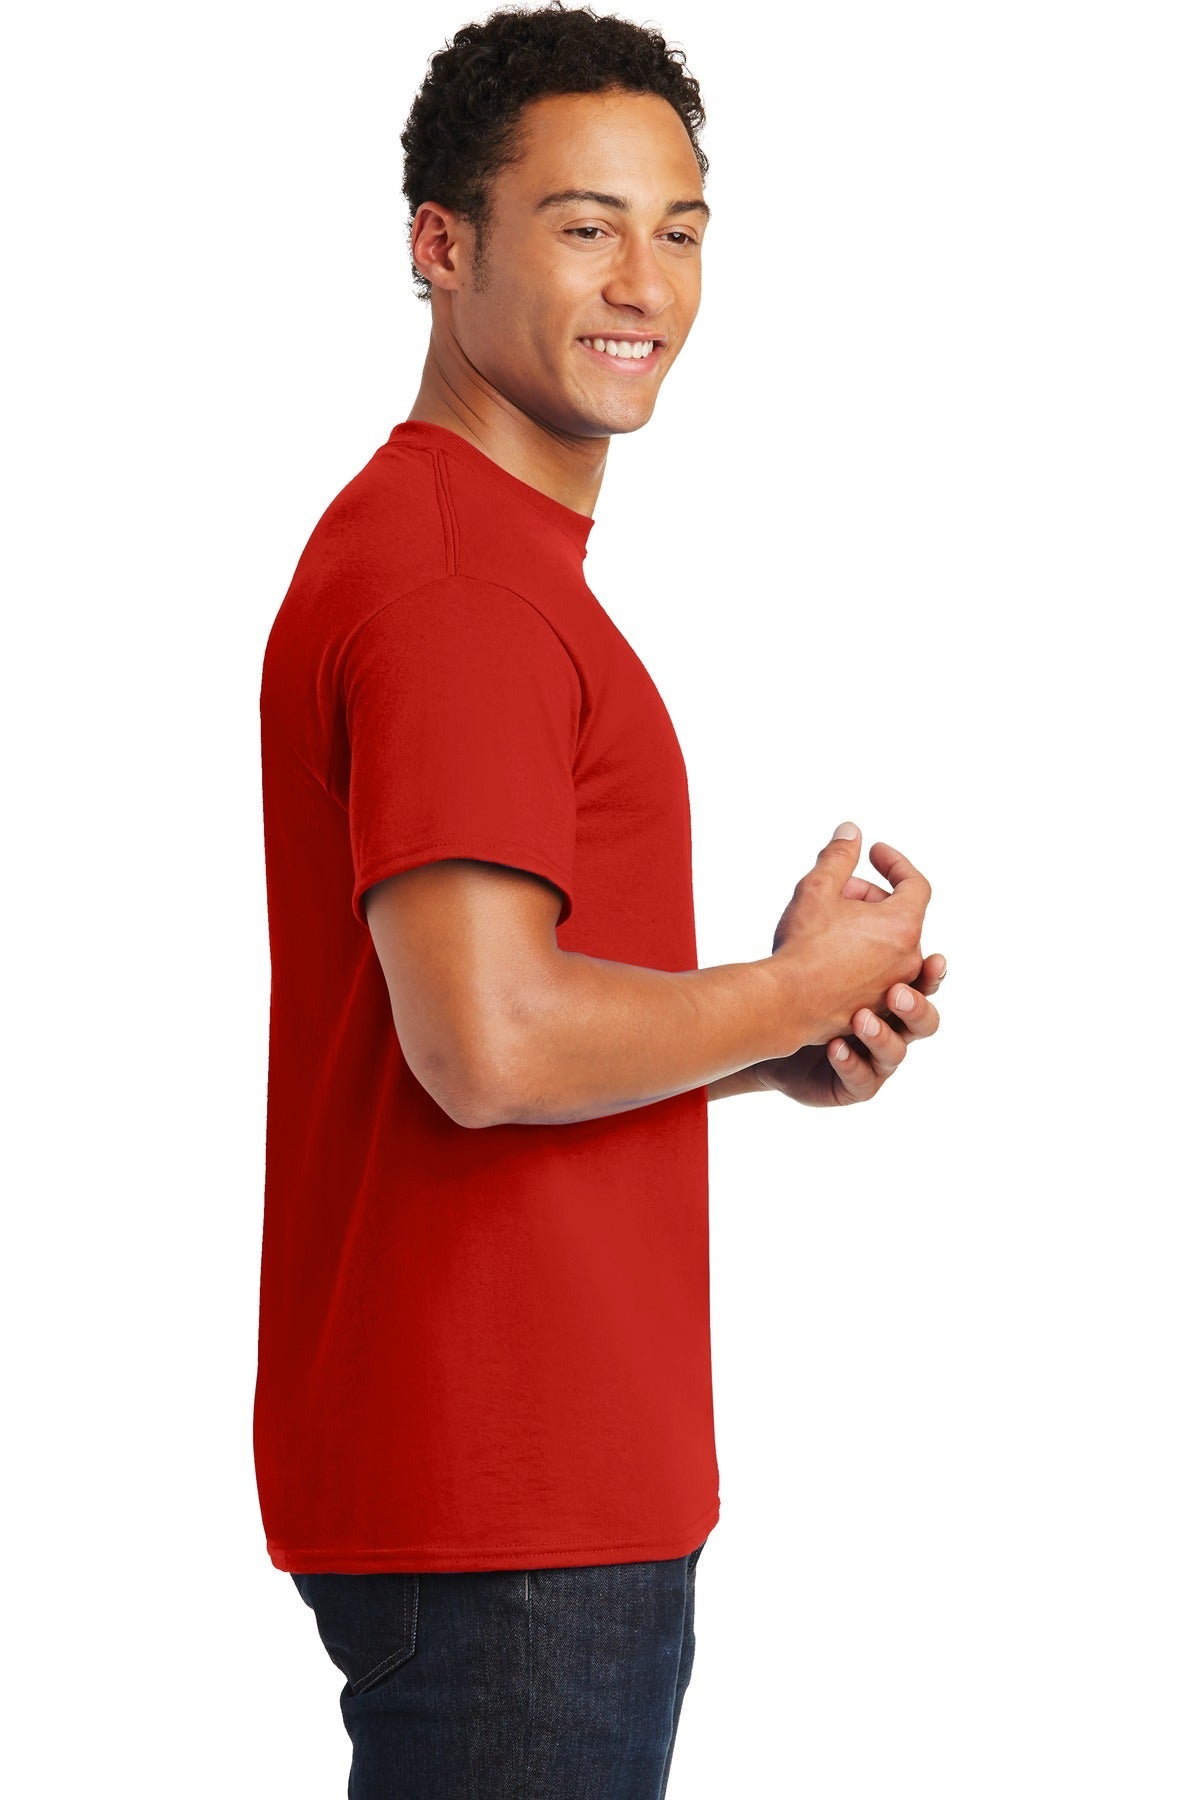 Gildan® - DryBlend® 50 Cotton/50 Poly T-Shirt. 8000 [Red] - DFW Impression